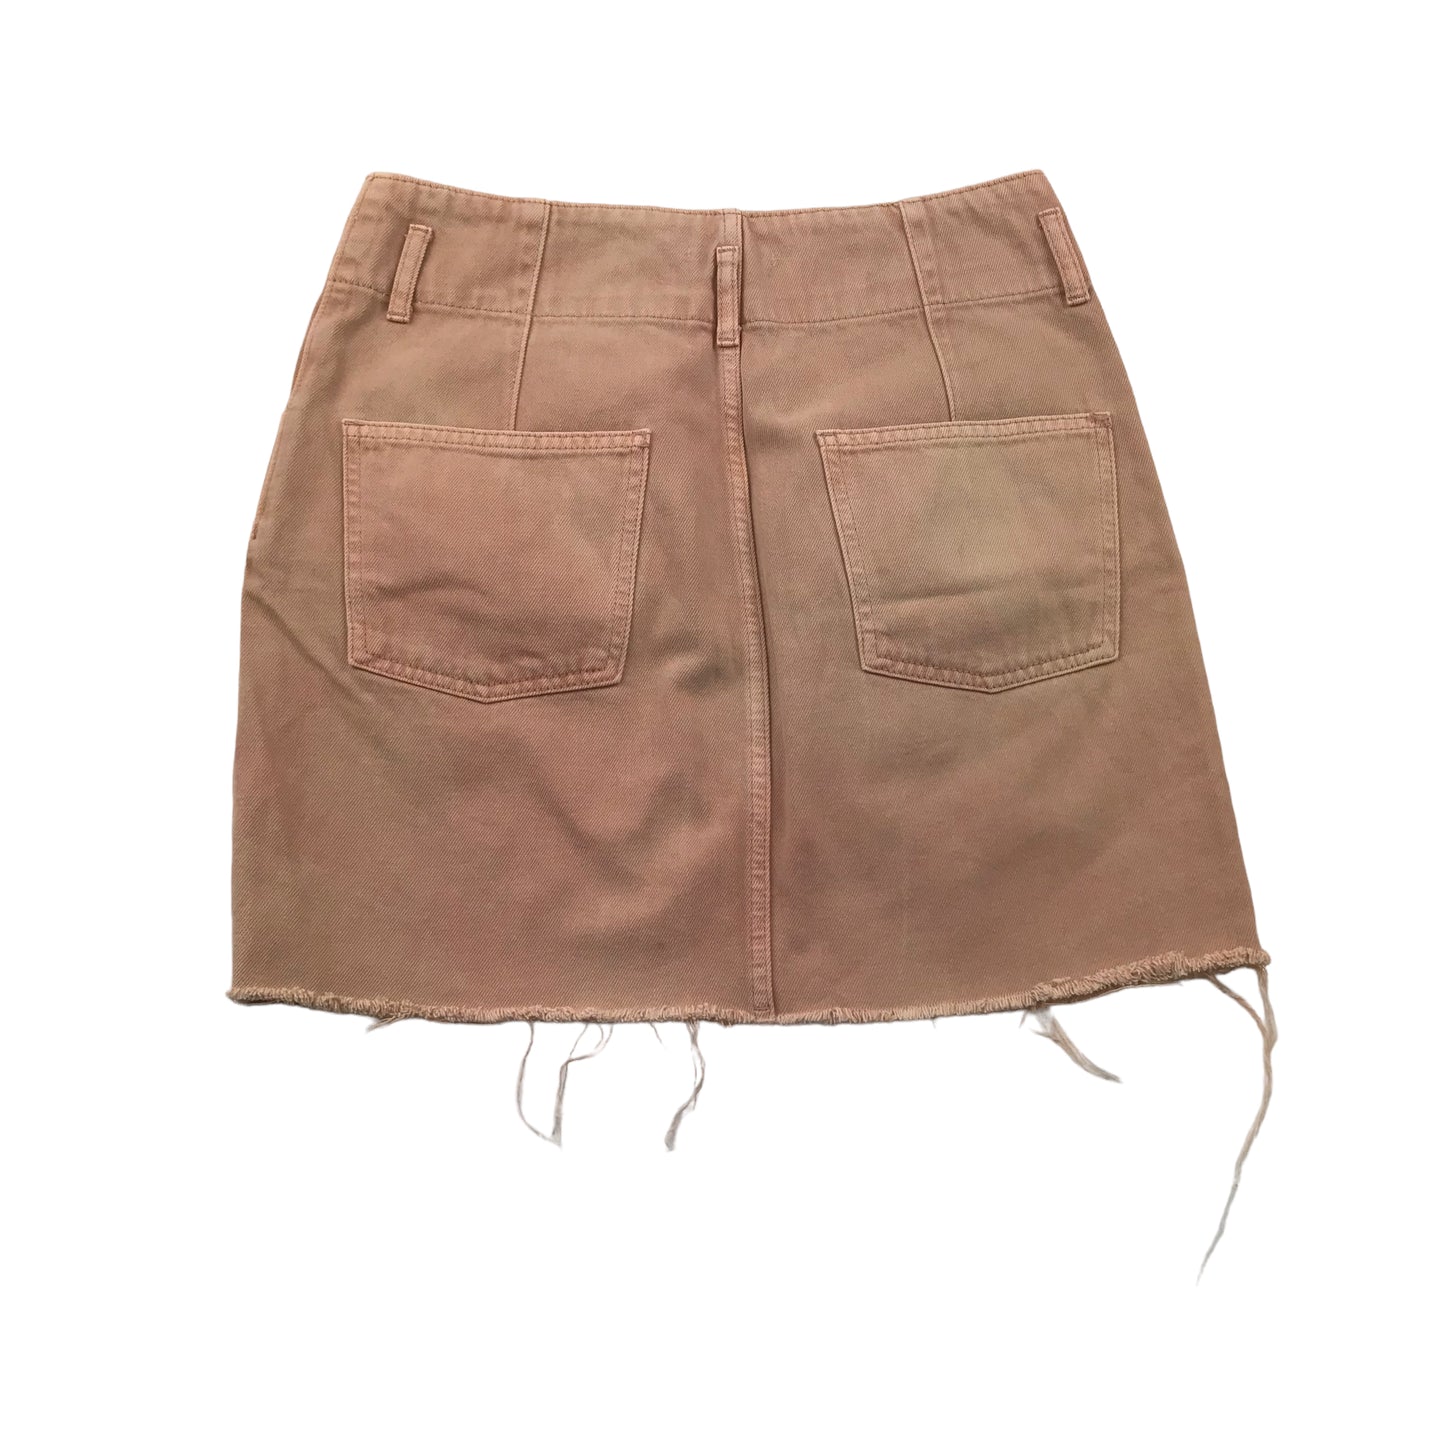 Top Shop Beige Denim Skirt Women Size 12